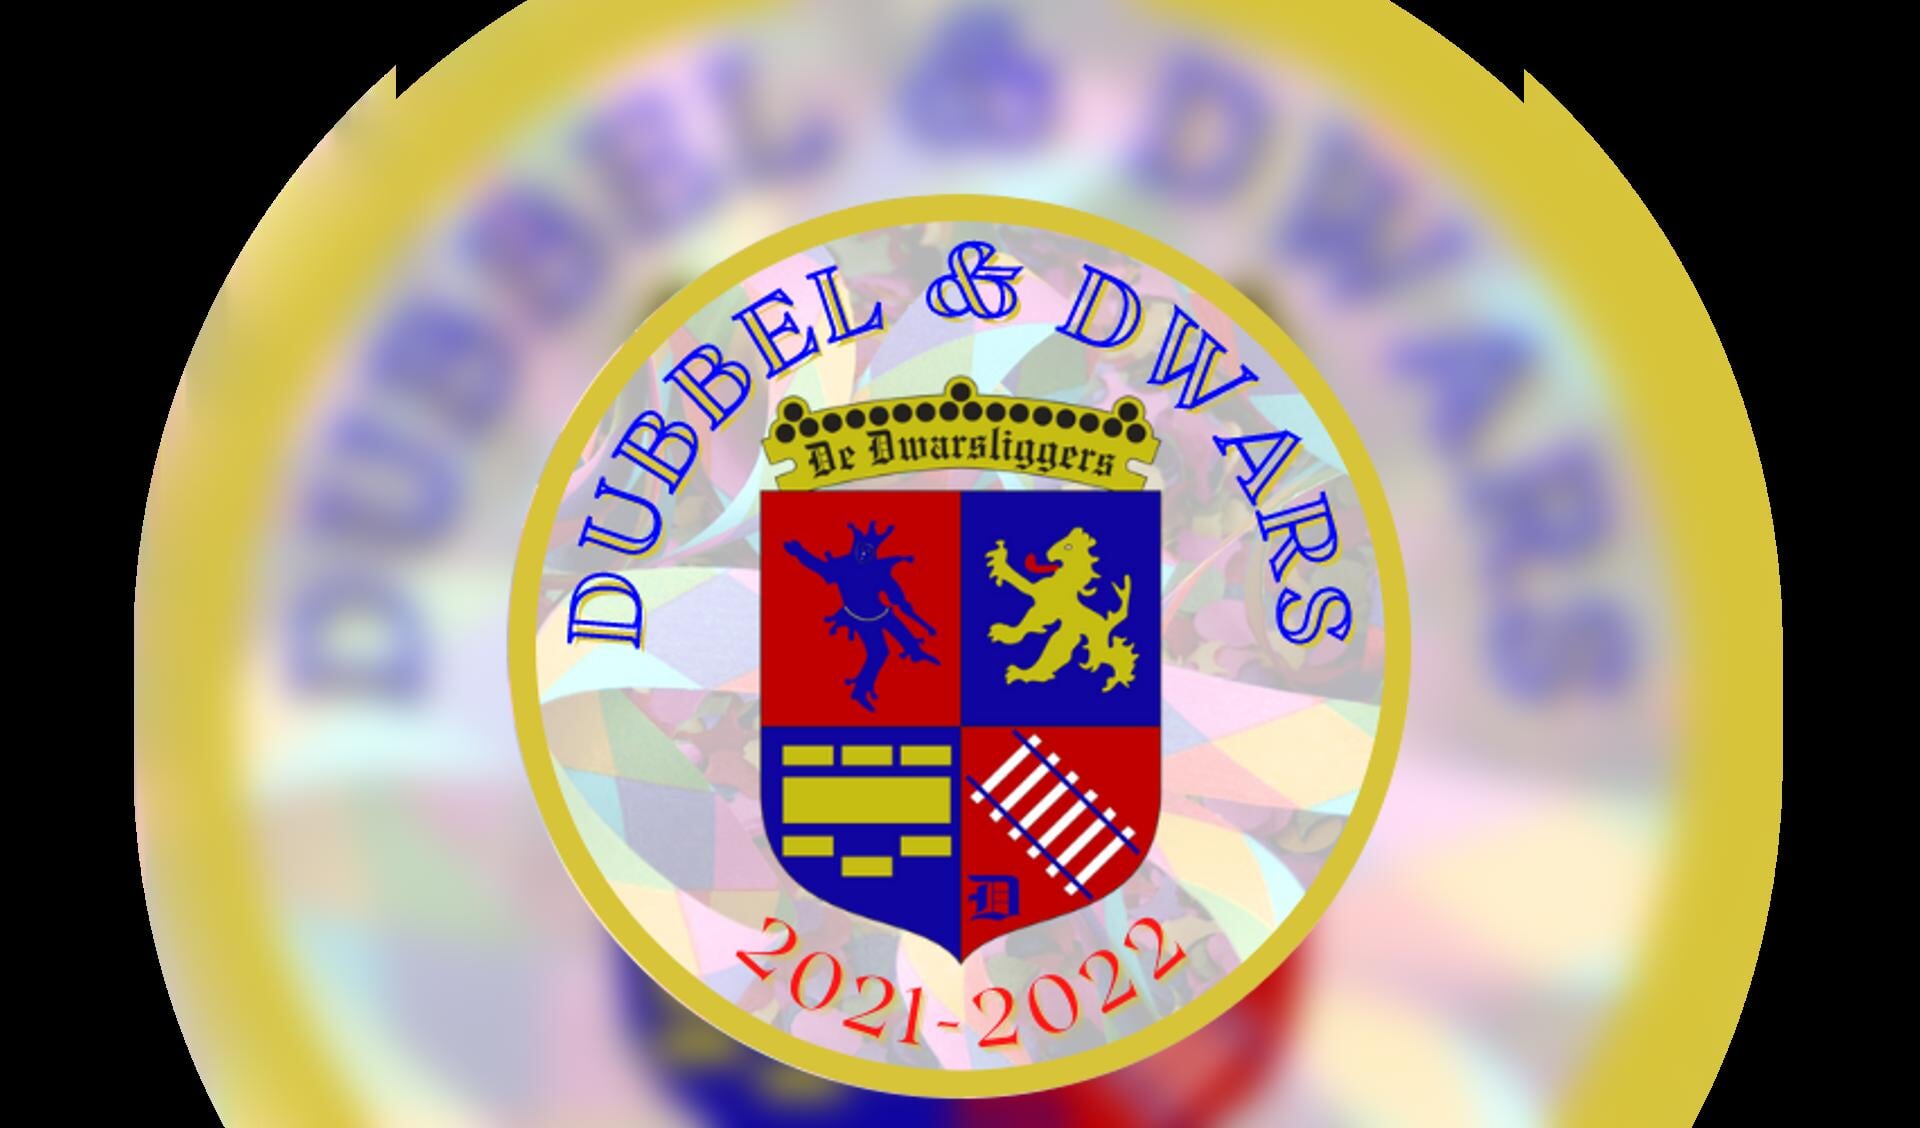 Dubbel & Dwars ; thema 2021/2022